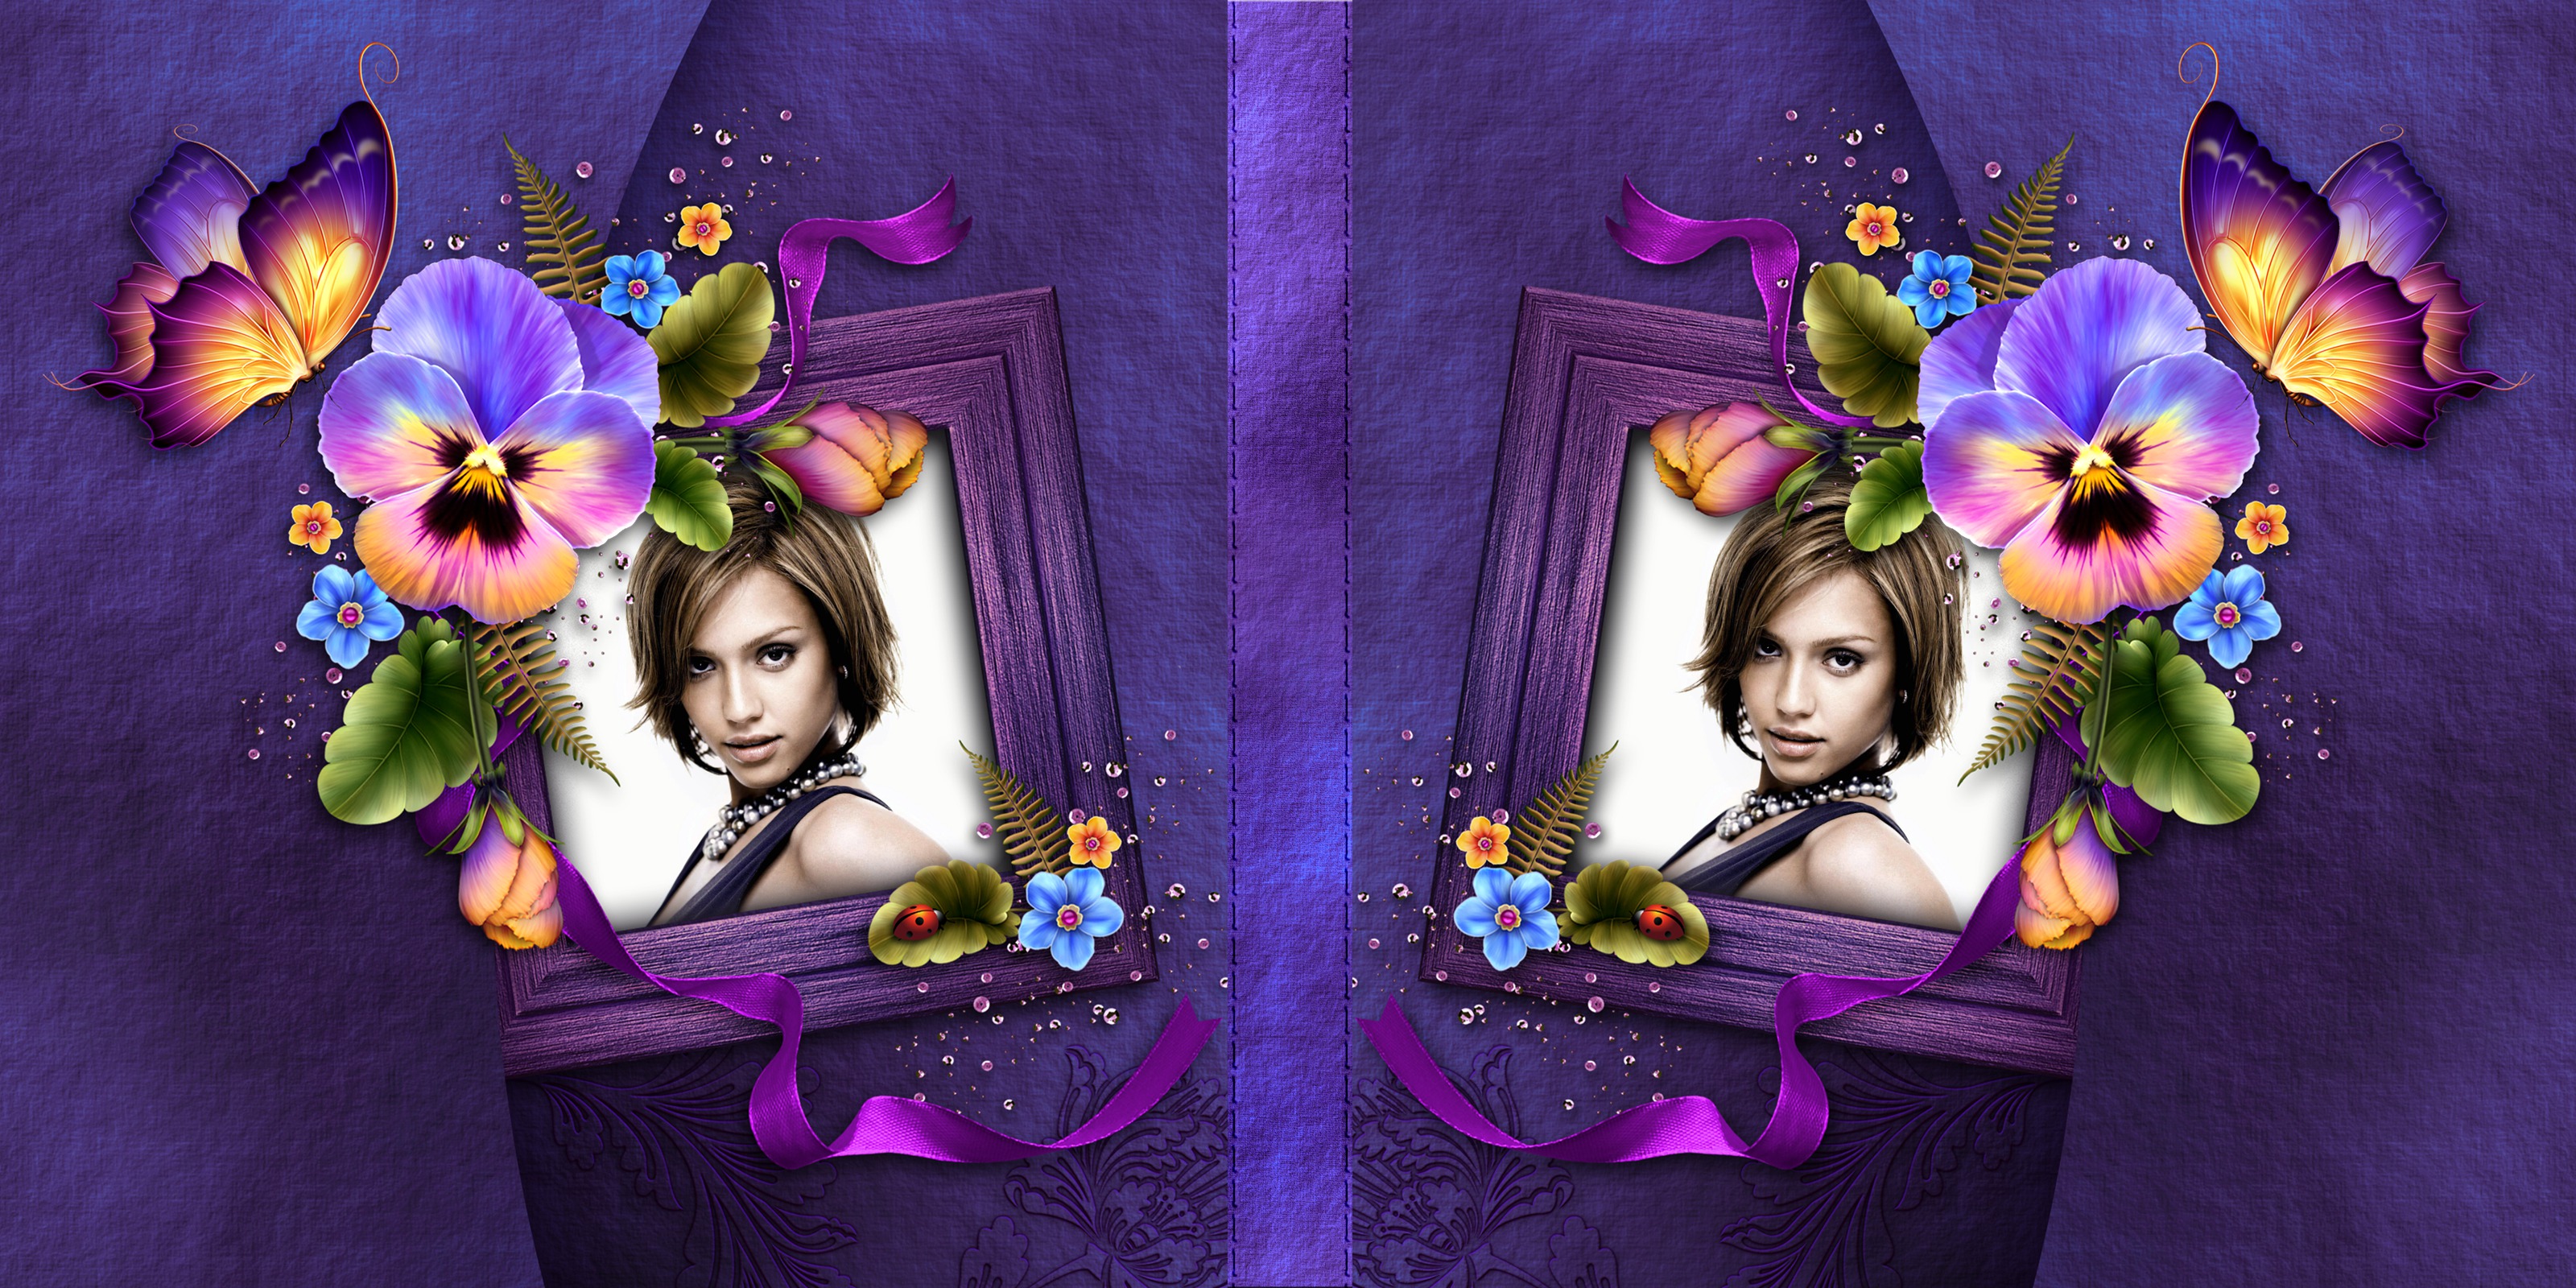 Sampul buku ungu dengan bunga #2 Photomontage